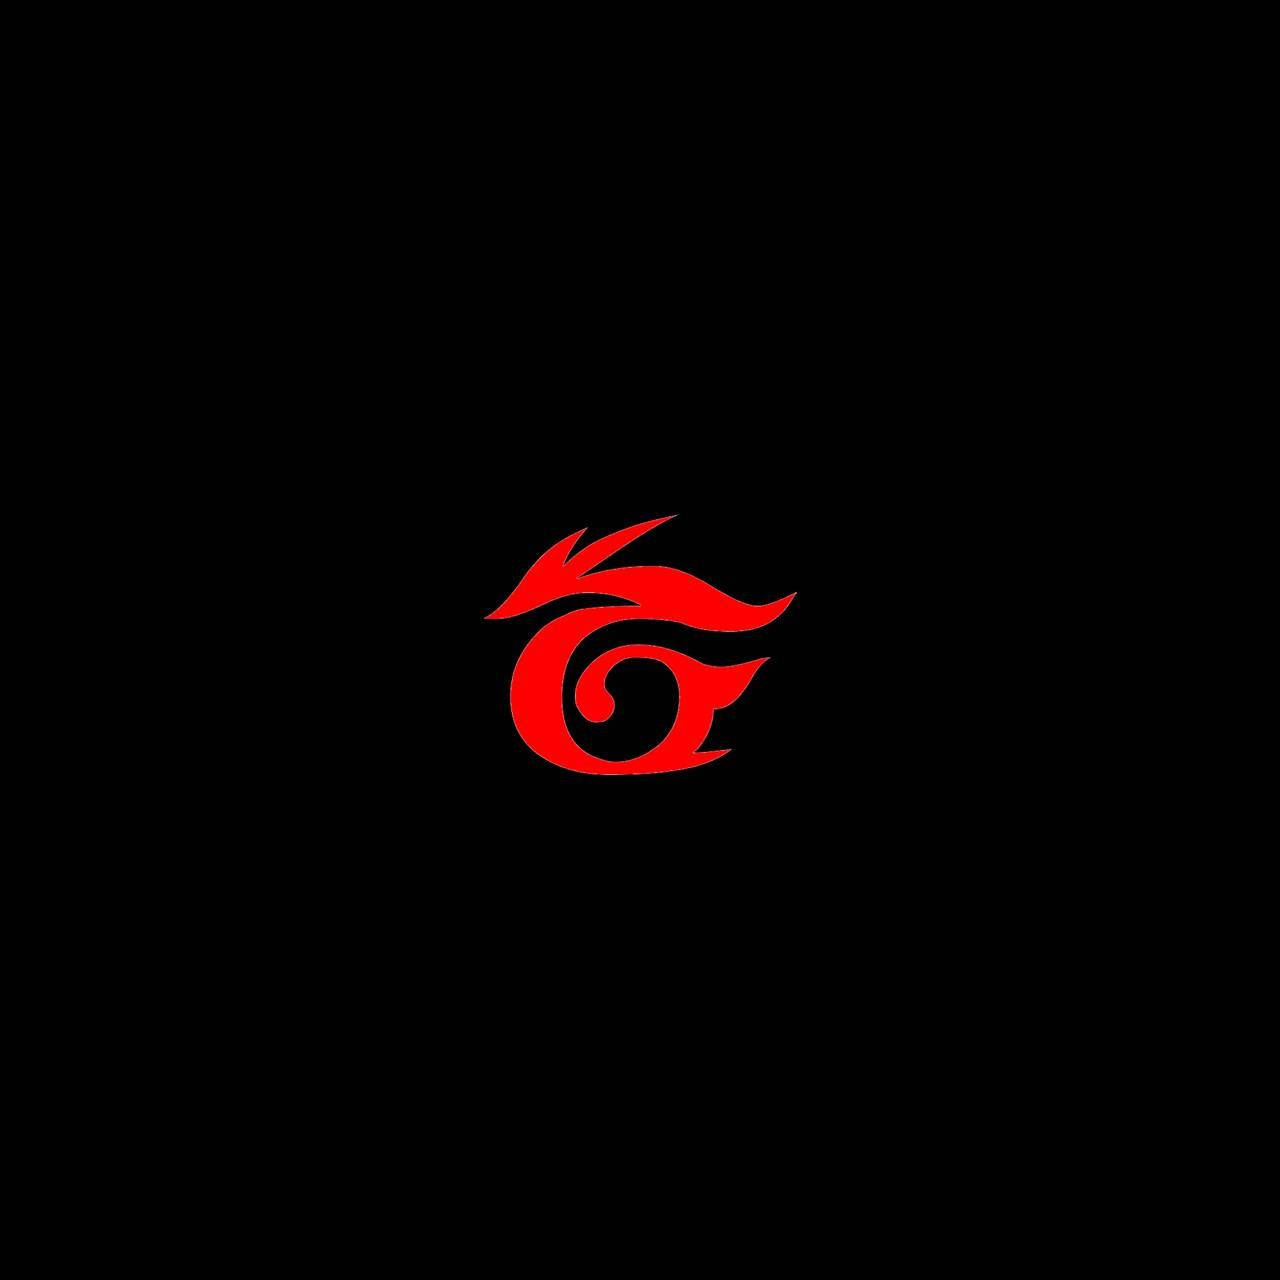 Logo Garena logo - Pesquisa Google